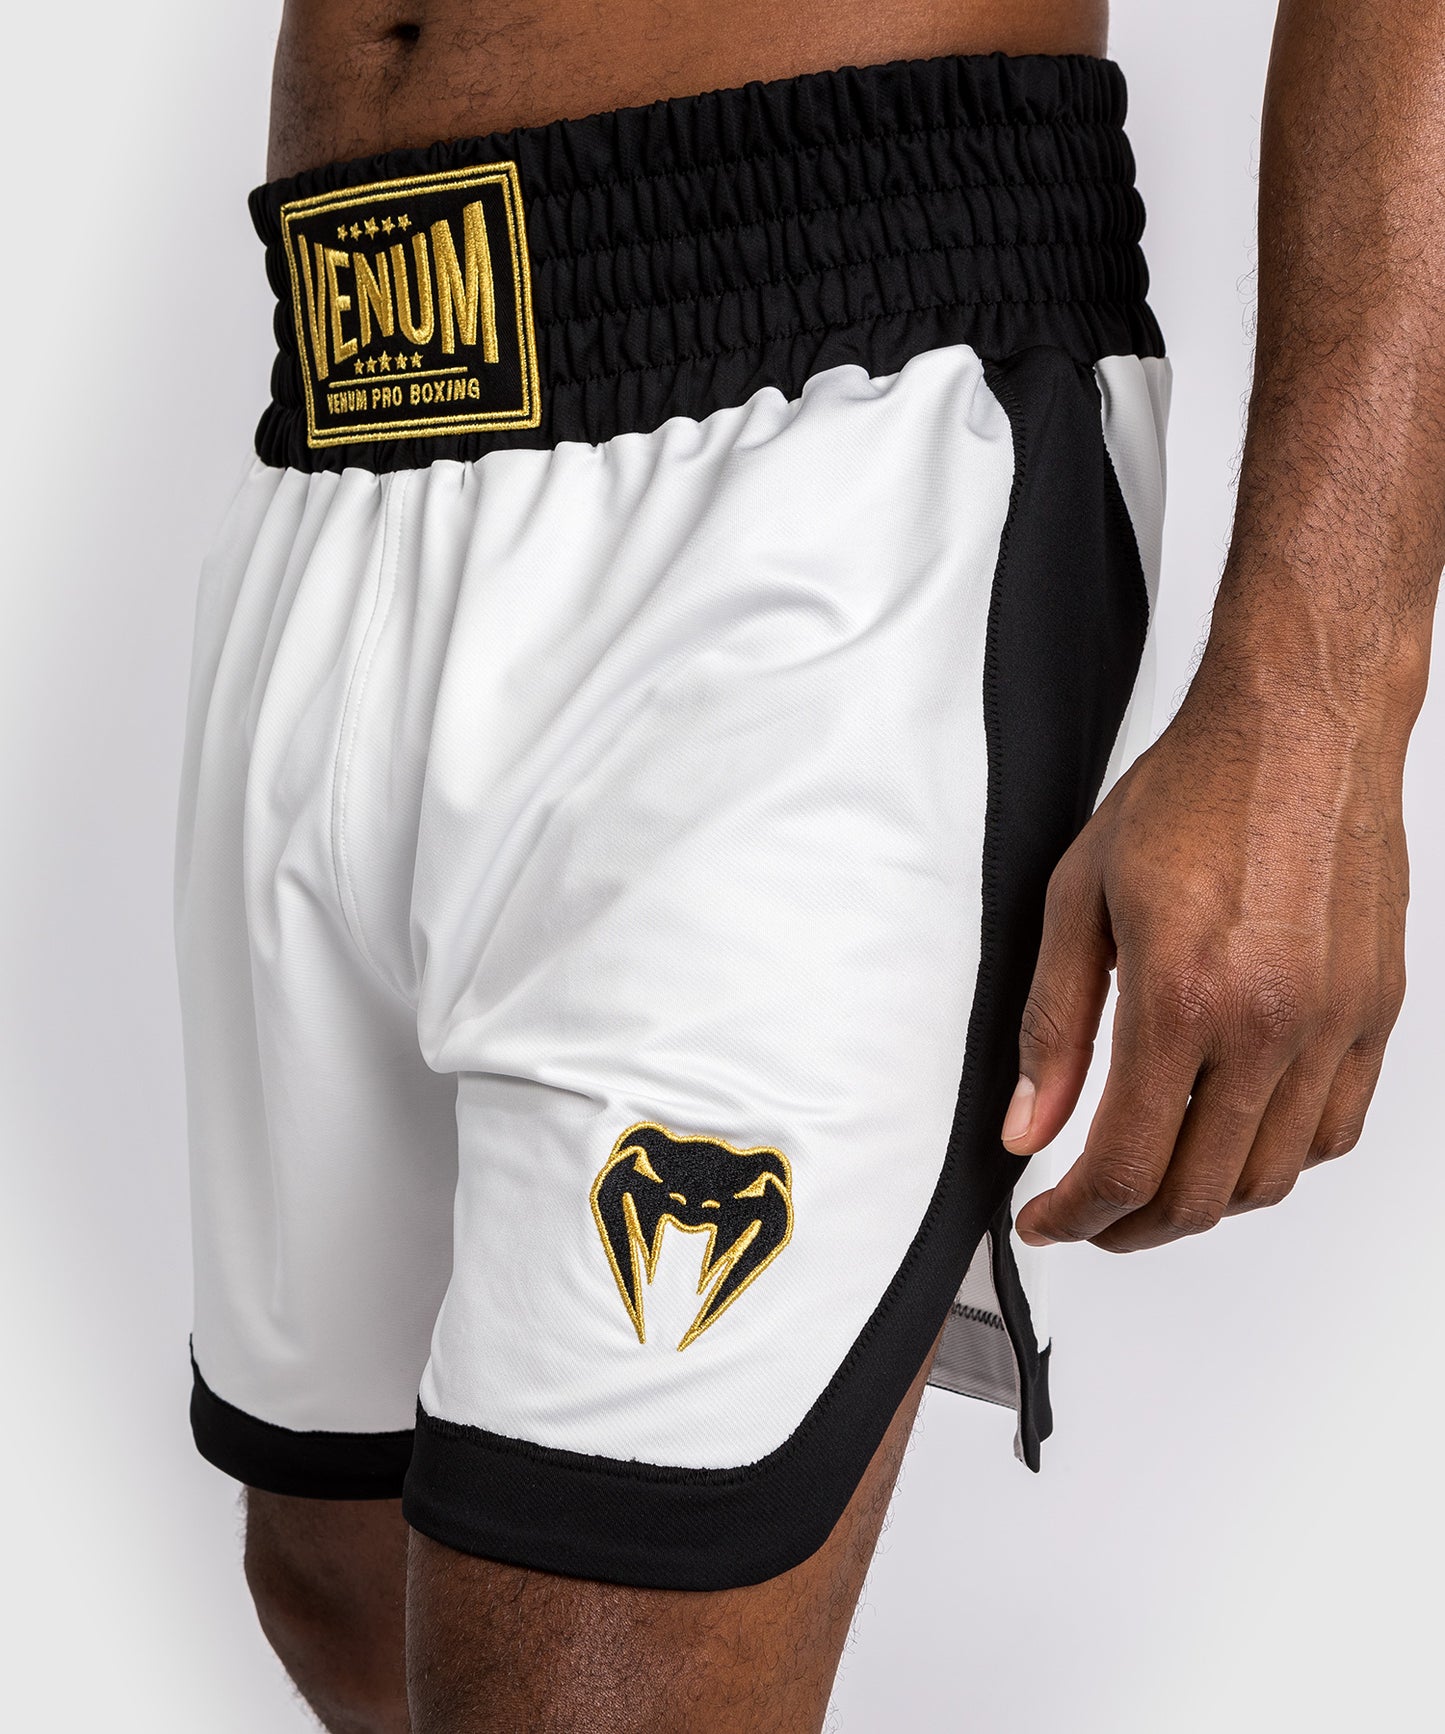 Venum Classic Boxing Shorts - Blanco/Negro